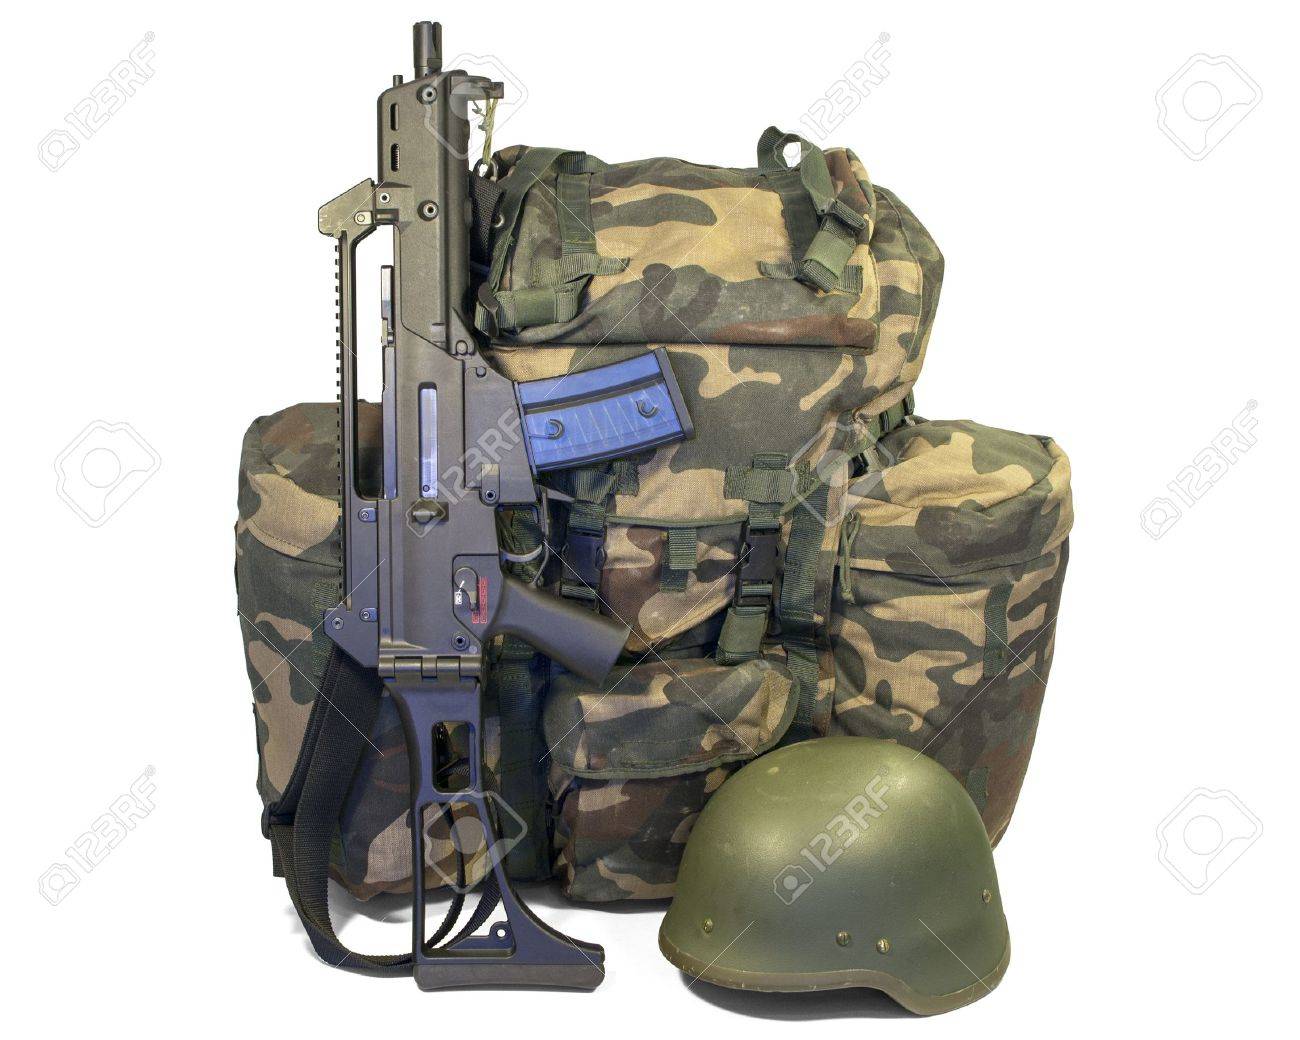 15359557-soldier-equipment-automatic-rifle-backpack-helmet-Stock-Photo.jpg